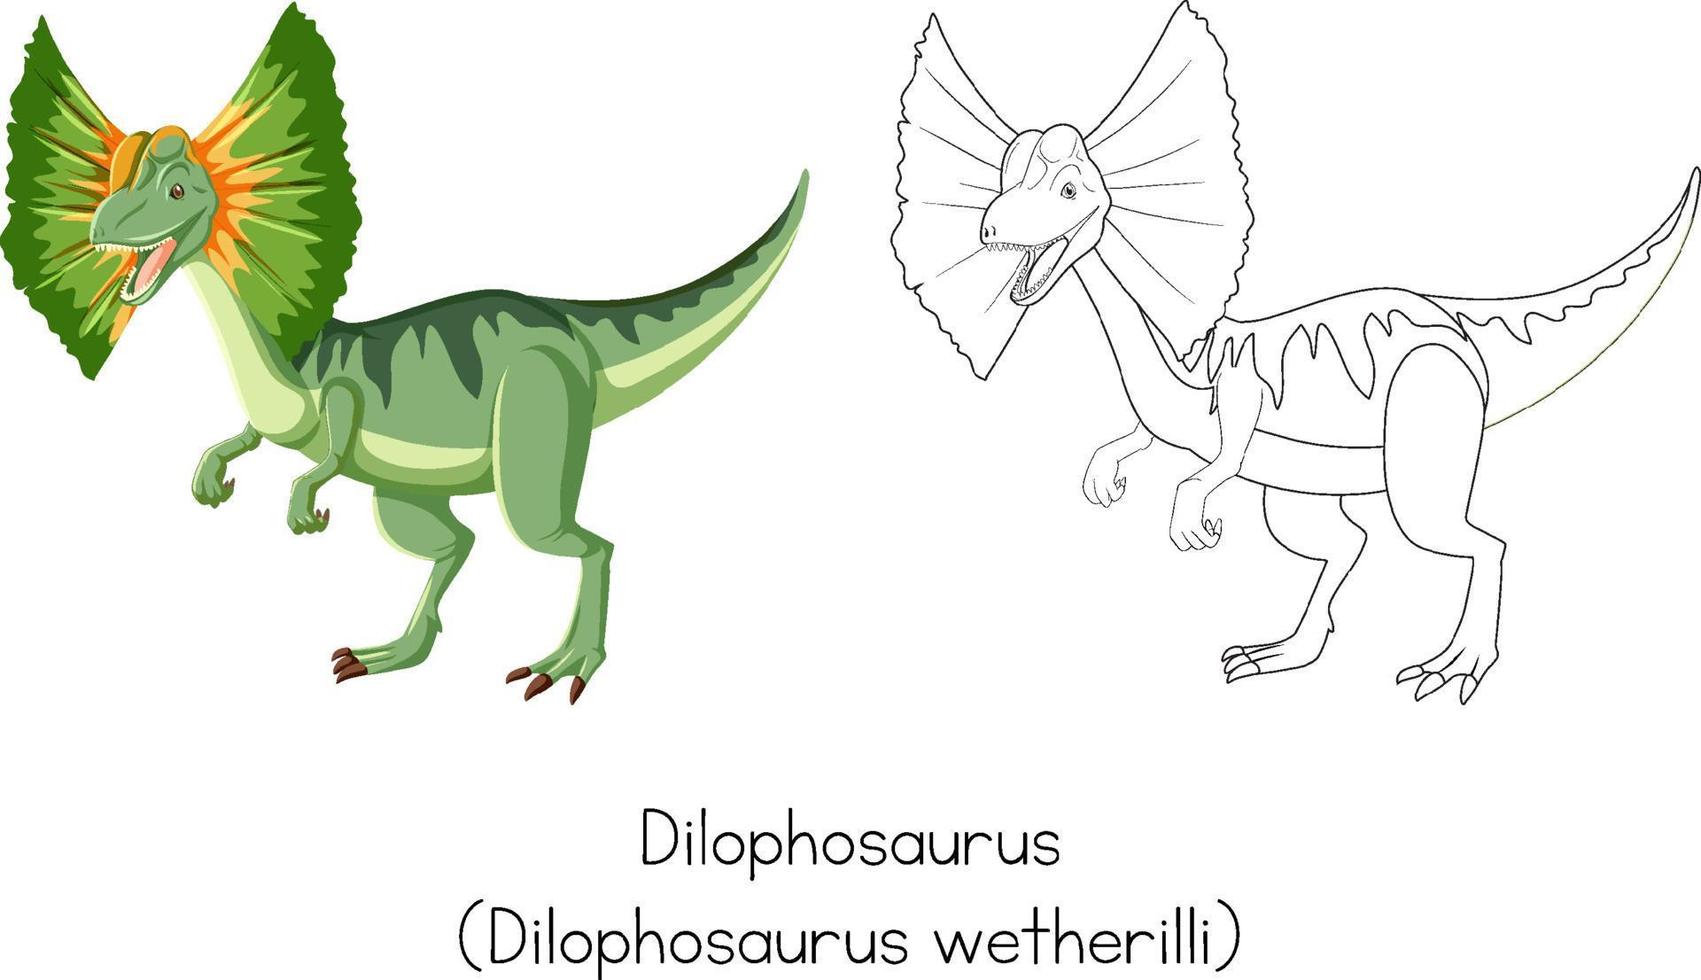 Dinosaur sketching of dilophosaurus vector